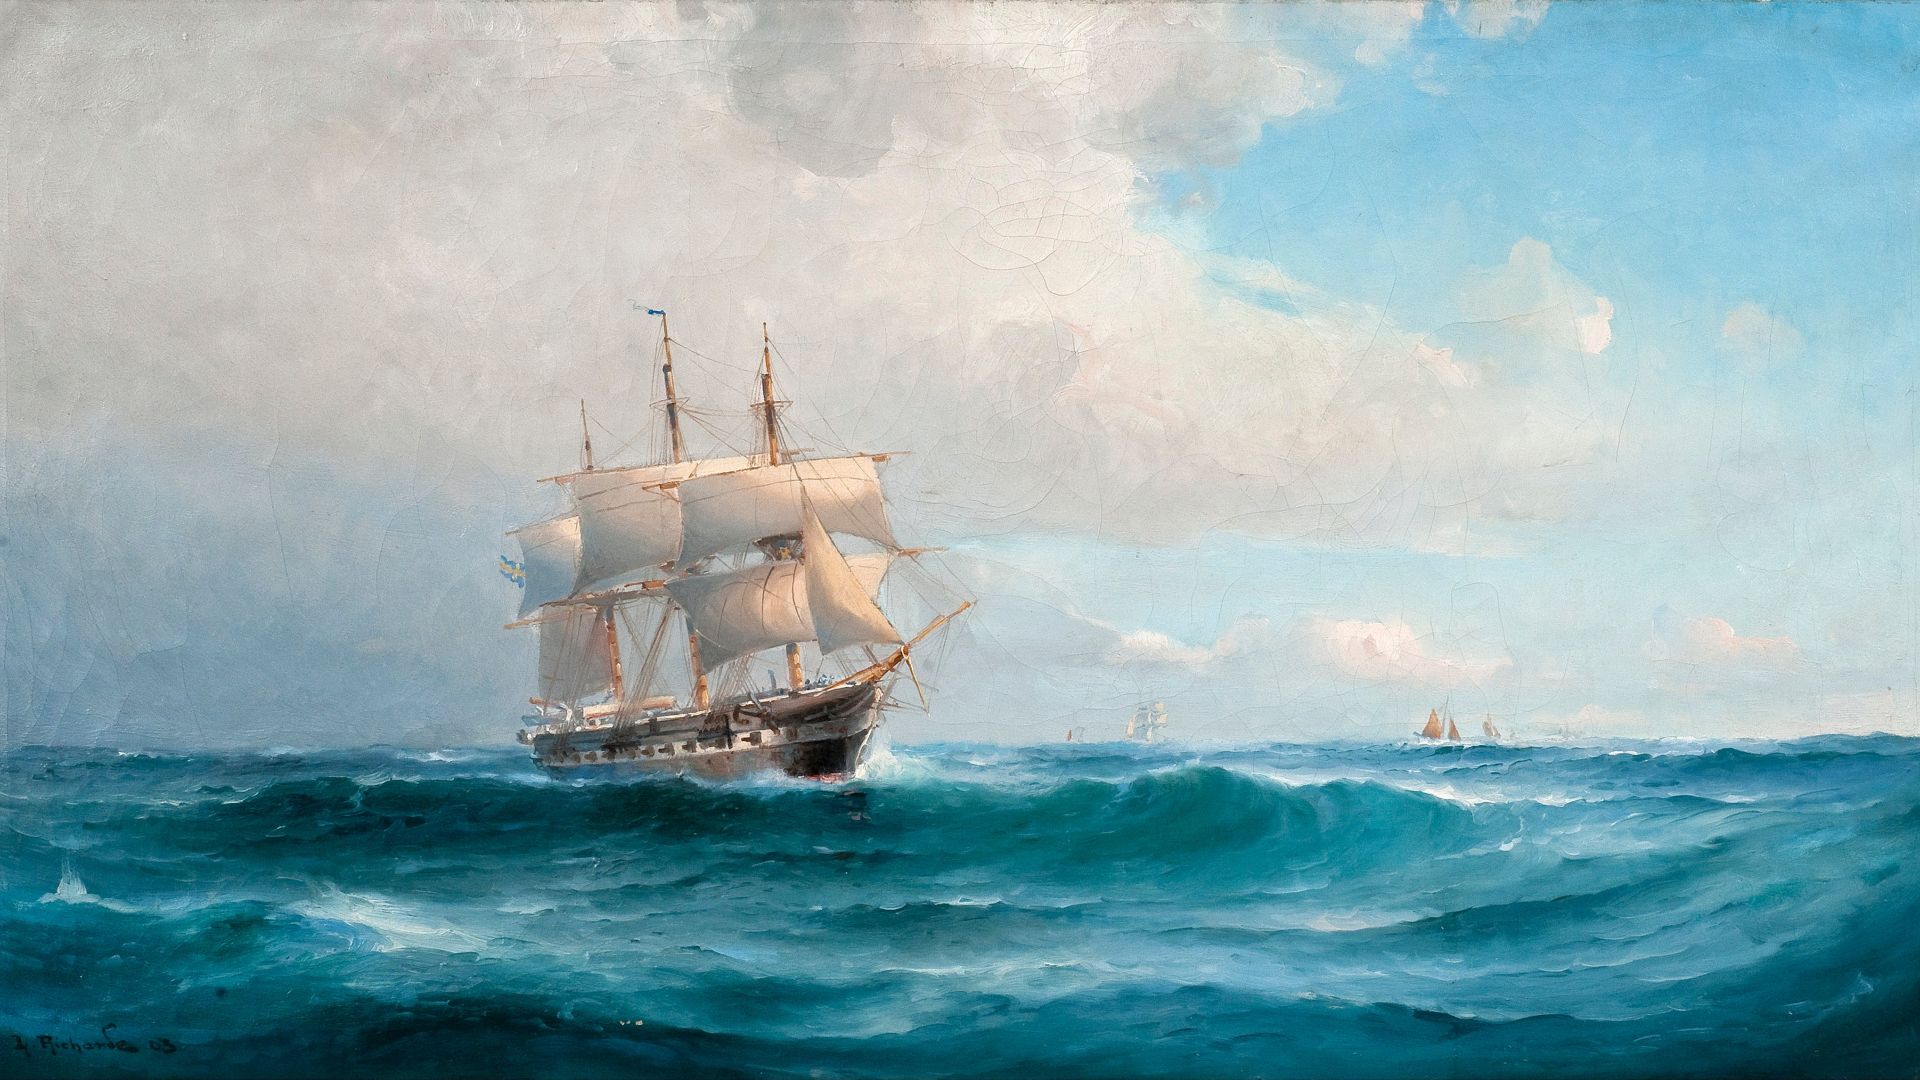 Wallpaper Oil painting ship in ocean wallpaper